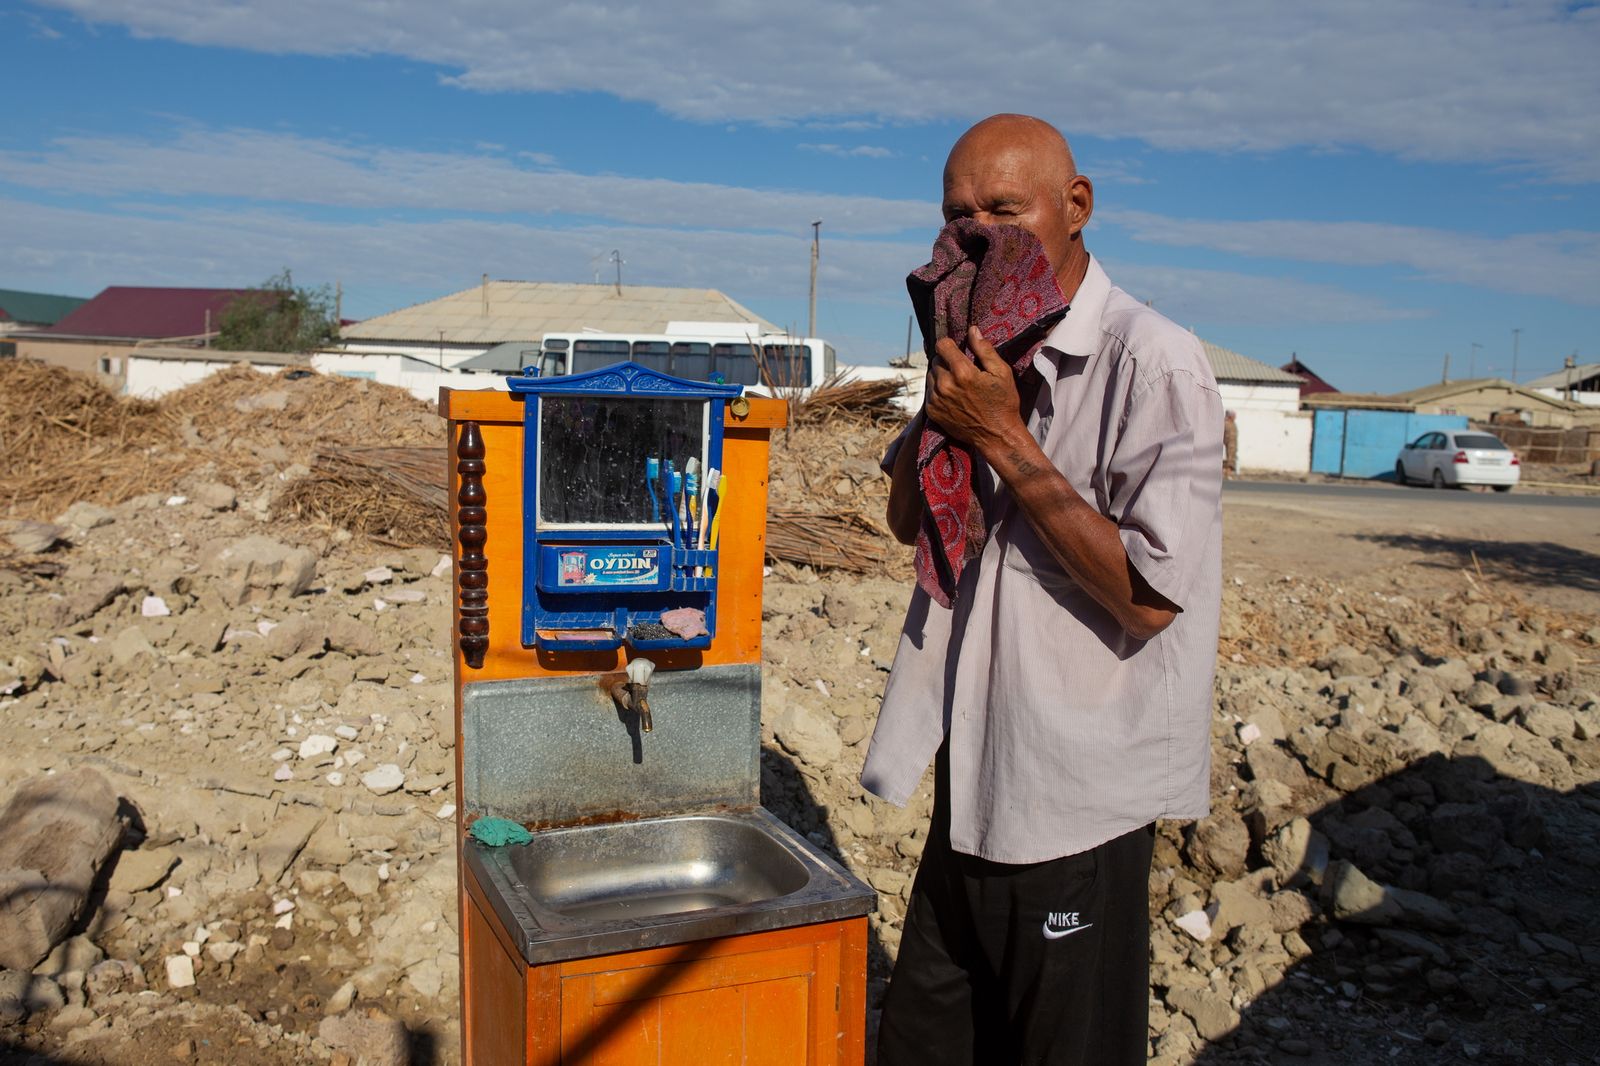 © Iulia Galushina - Moynak resident is washing his face on the street on the ruins of his old home. Moynaq, Uzbekistan.